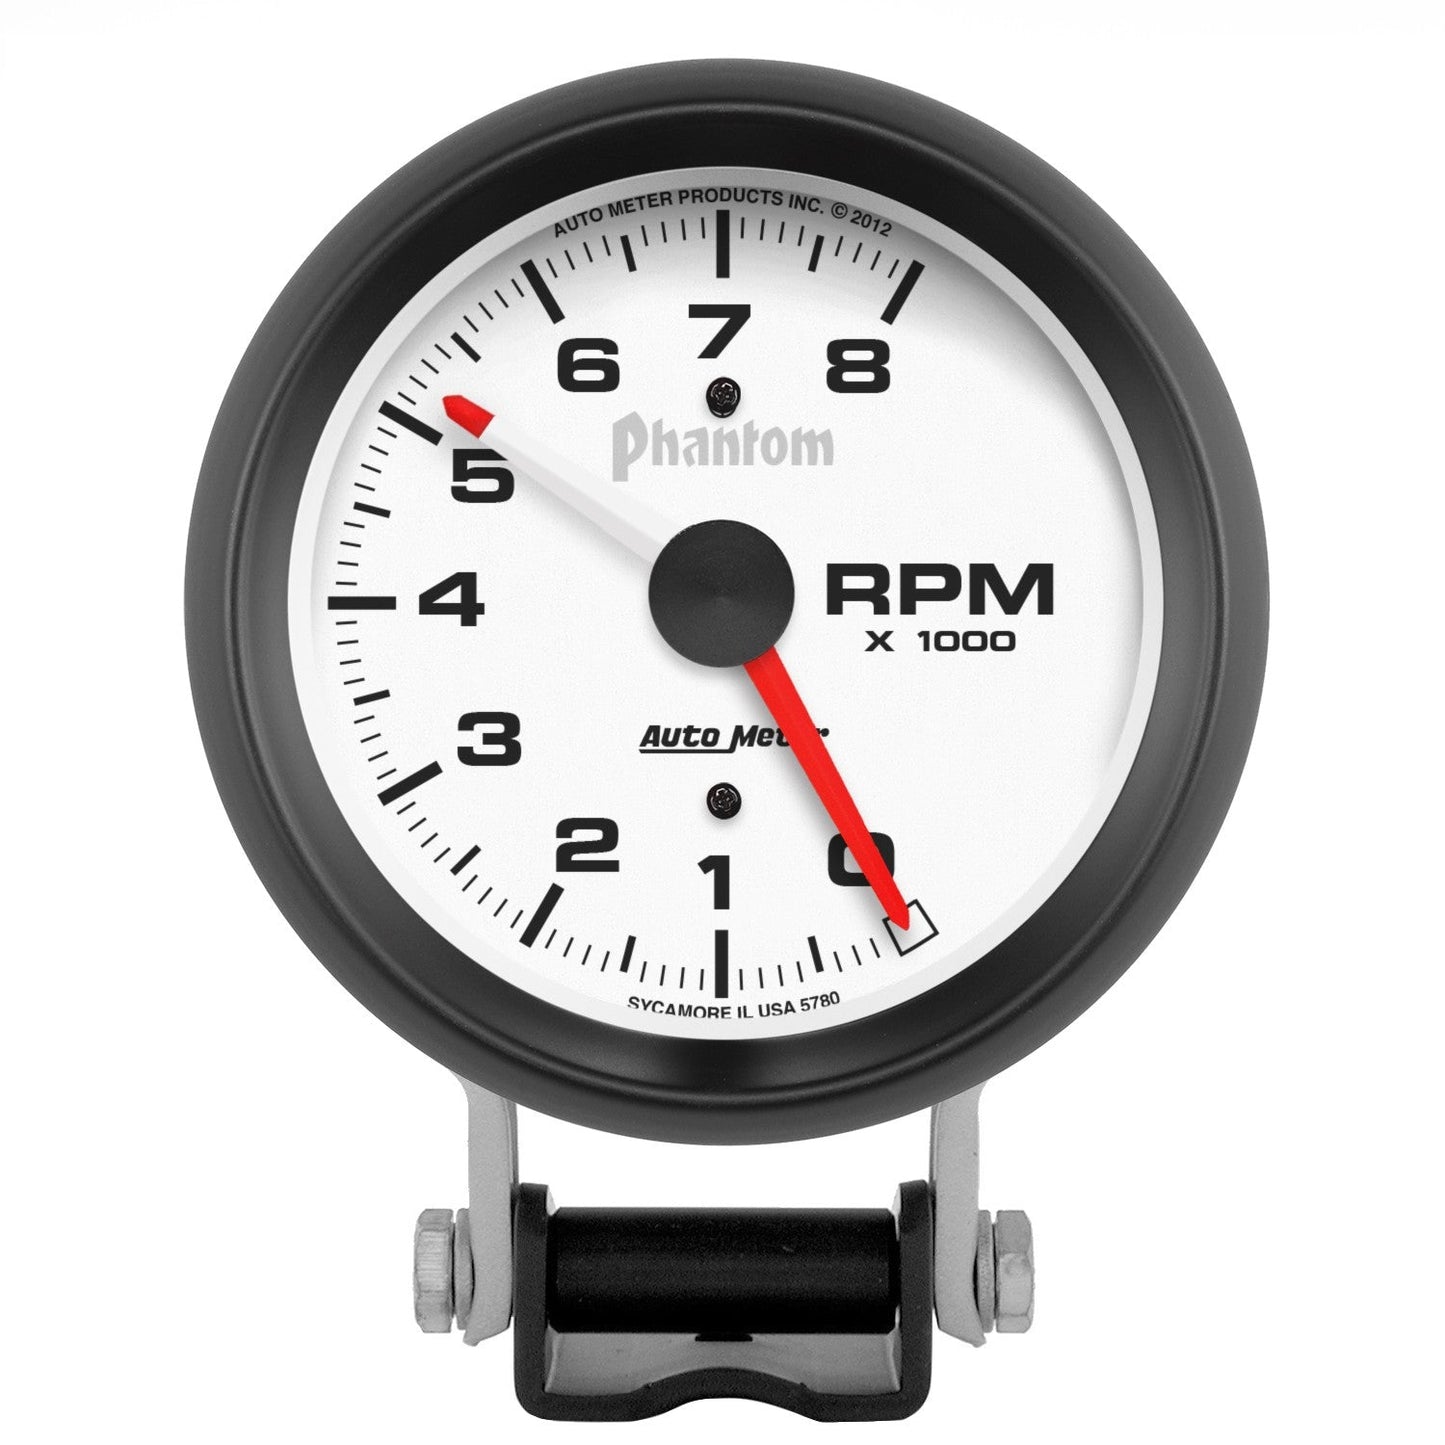 AutoMeter - 3-3/4" PEDESTAL TACHOMETER, 0-8,000 RPM, PHANTOM (5780)